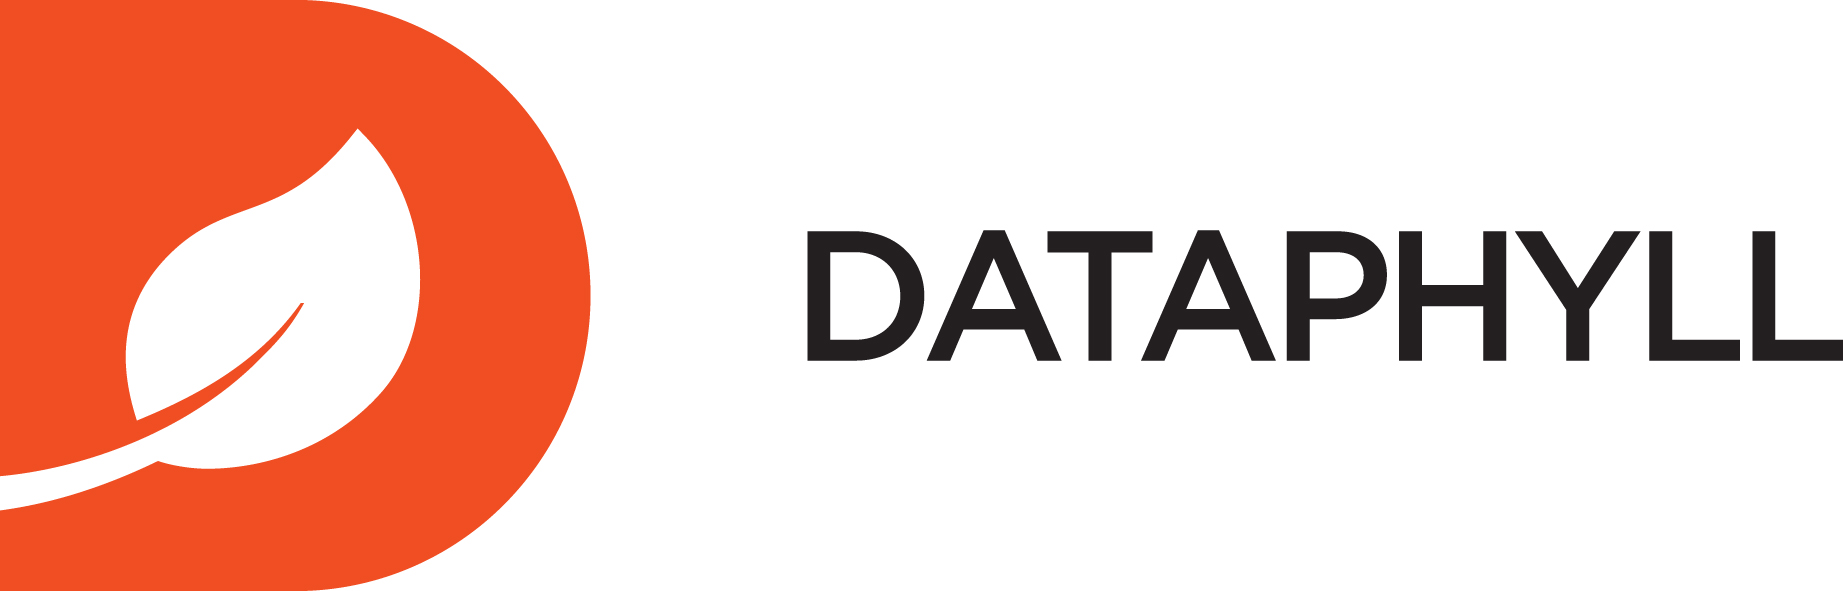 Dataphyll logo